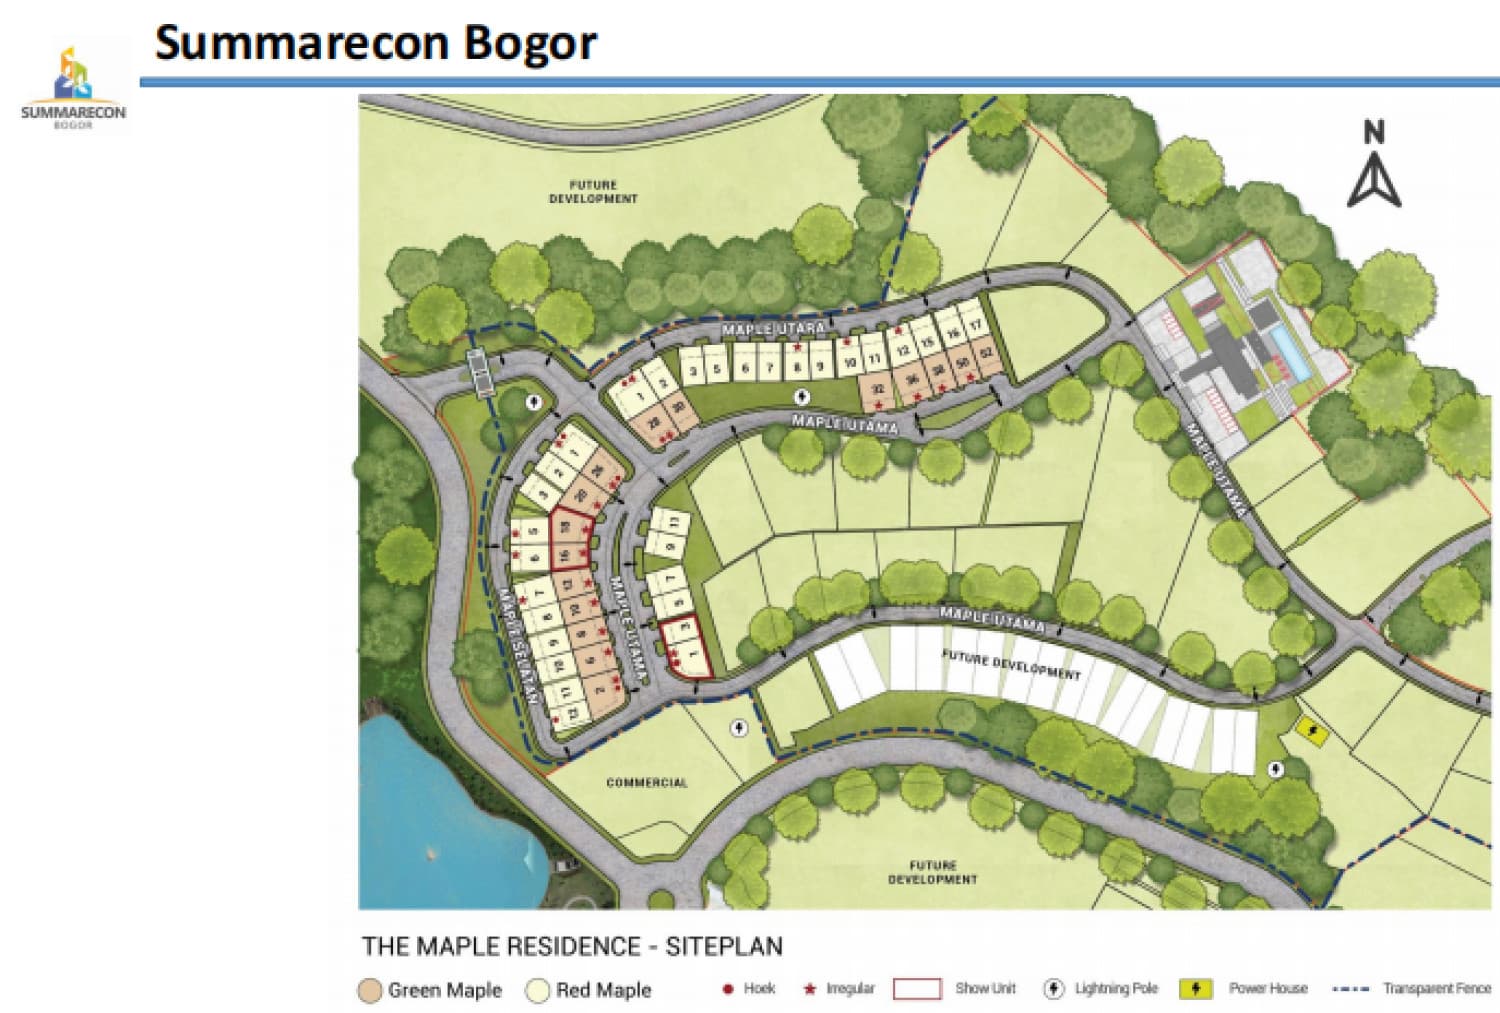 Siteplan Maple Residence Summarecon Bogor